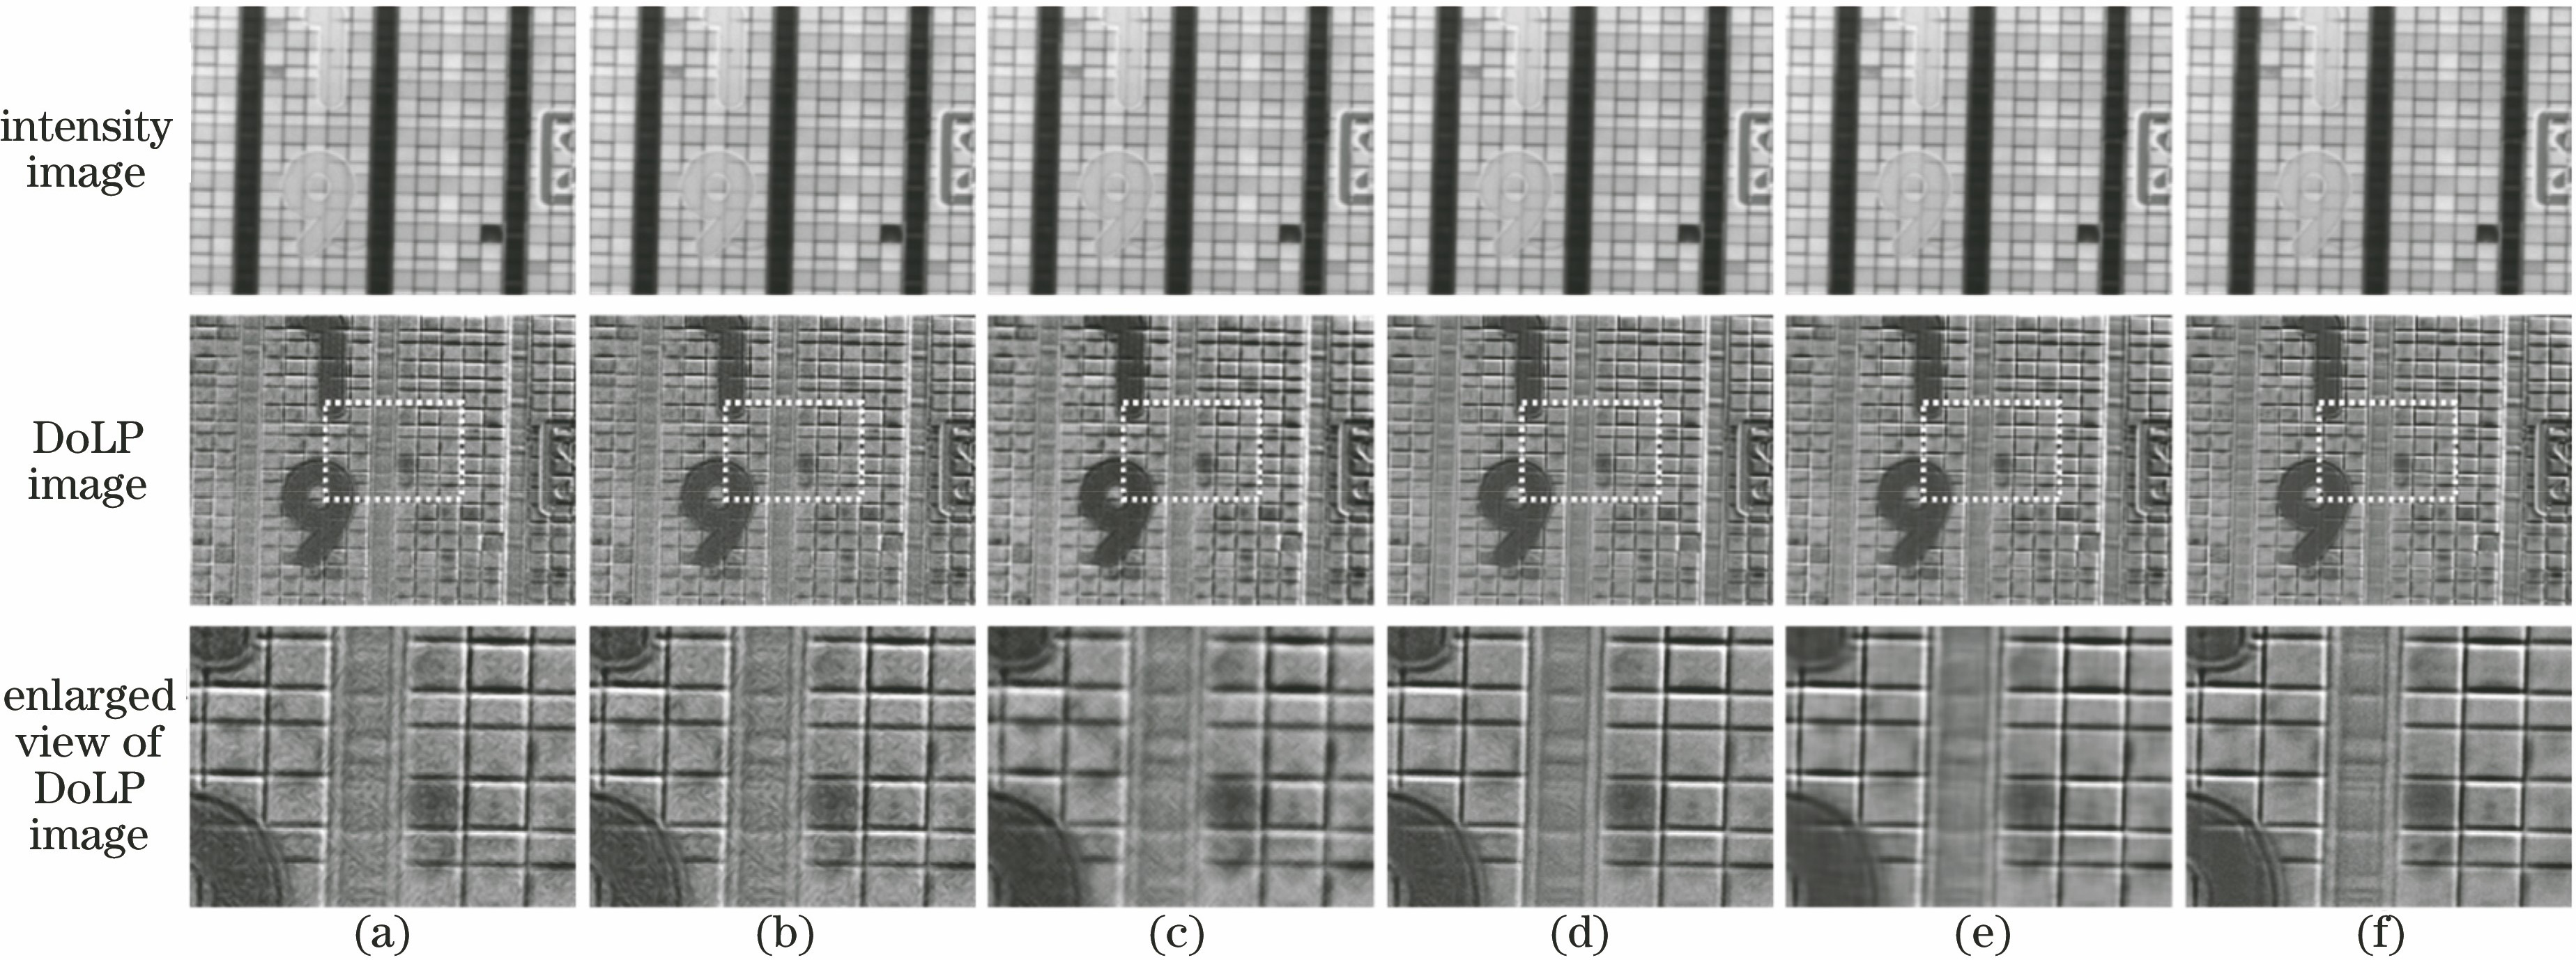 Interpolation flow of polarizing image in focal plane